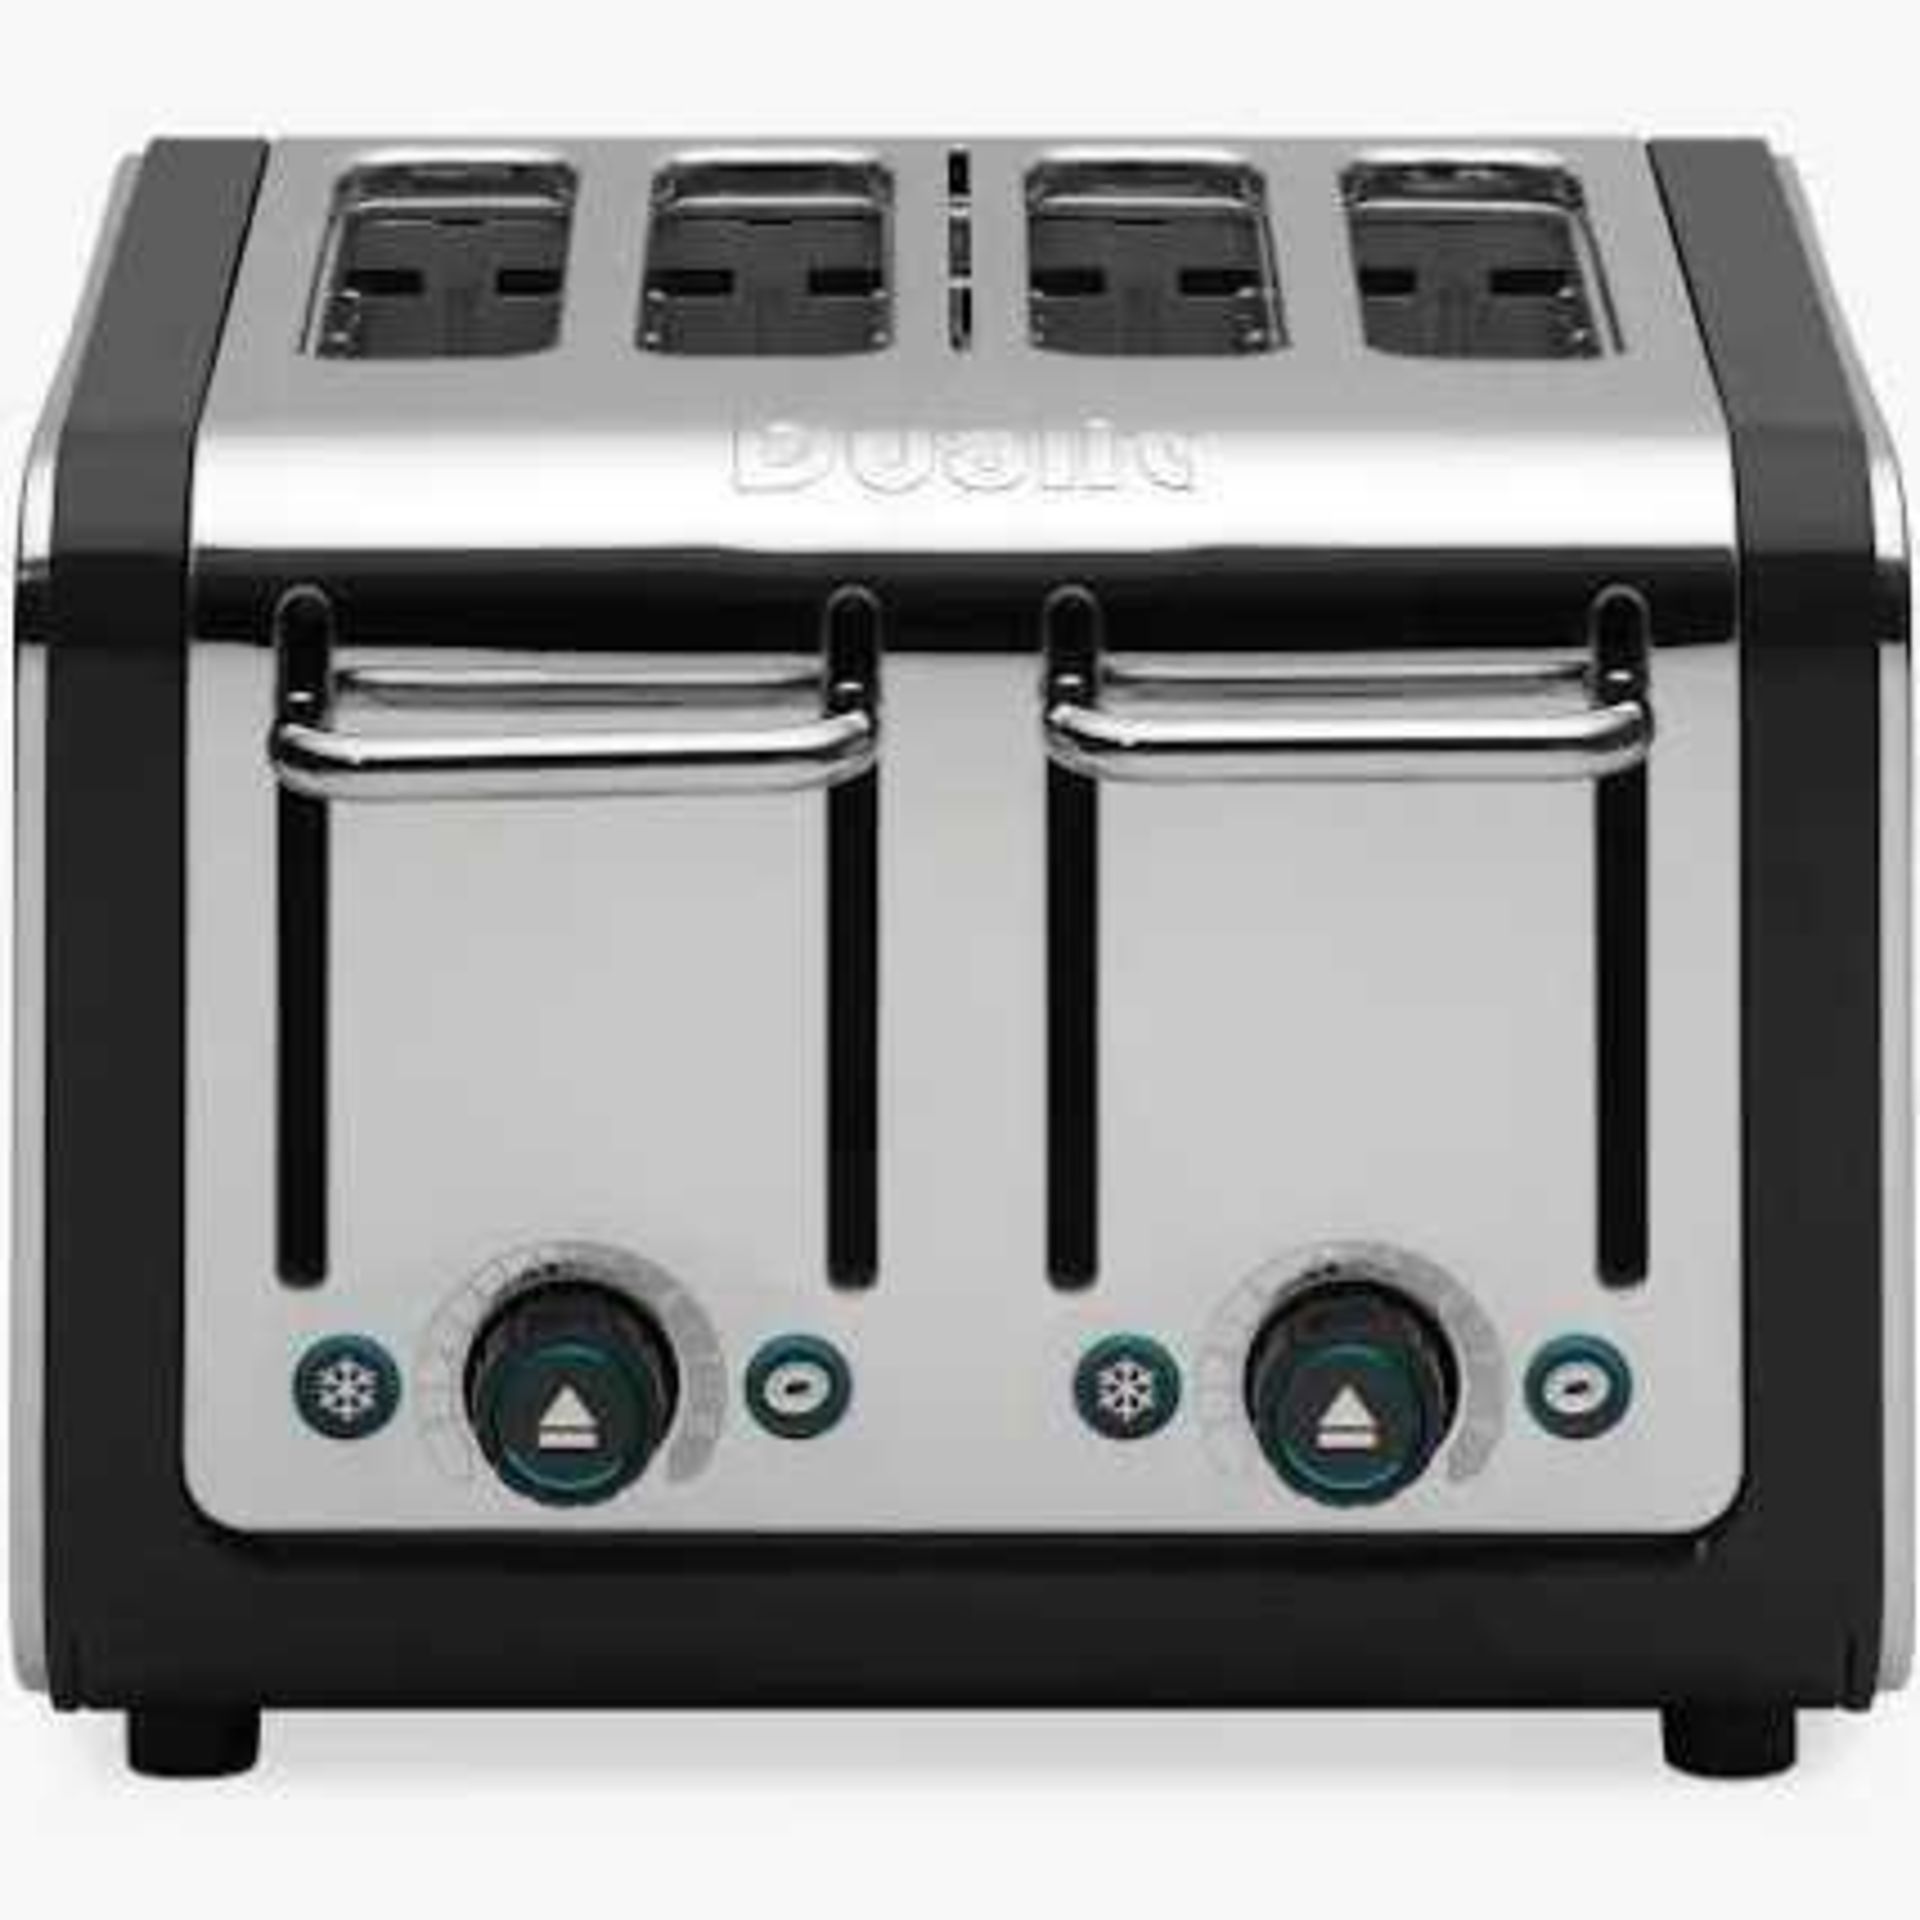 RRP £125 Boxed Dualit Architect 4 Slot Toaster